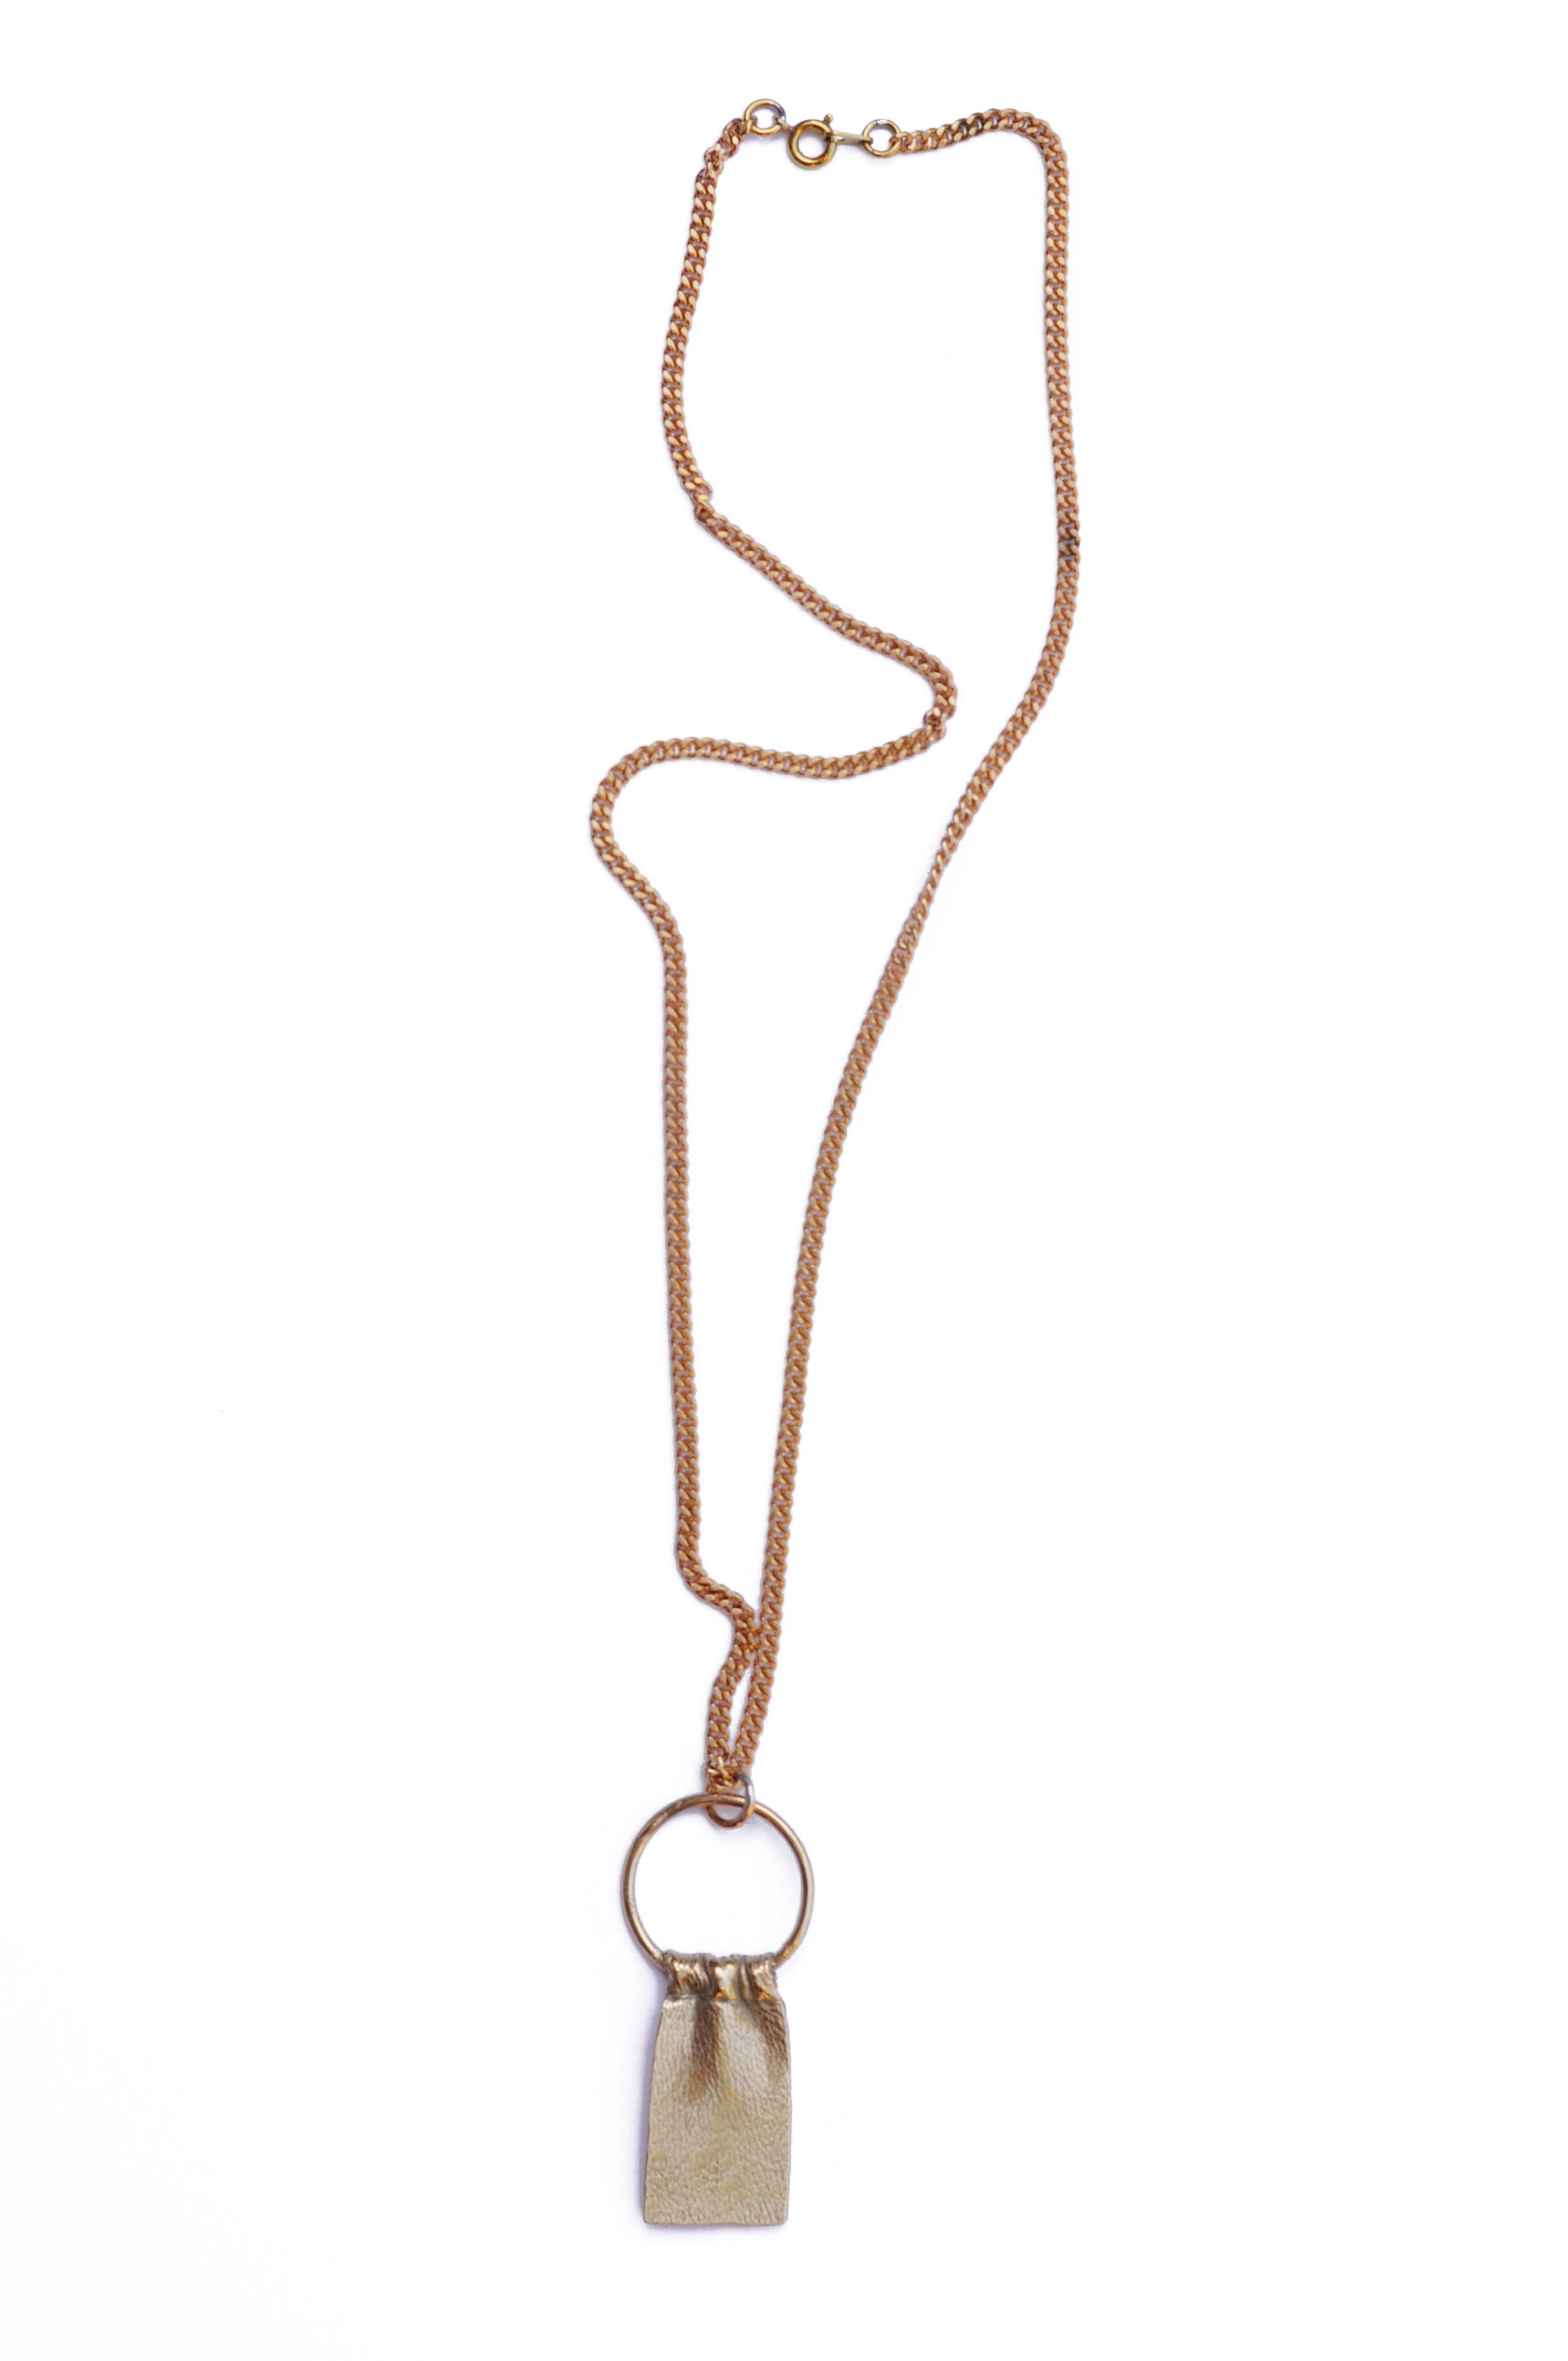 SALE -  CIRCLE DRAPE necklace